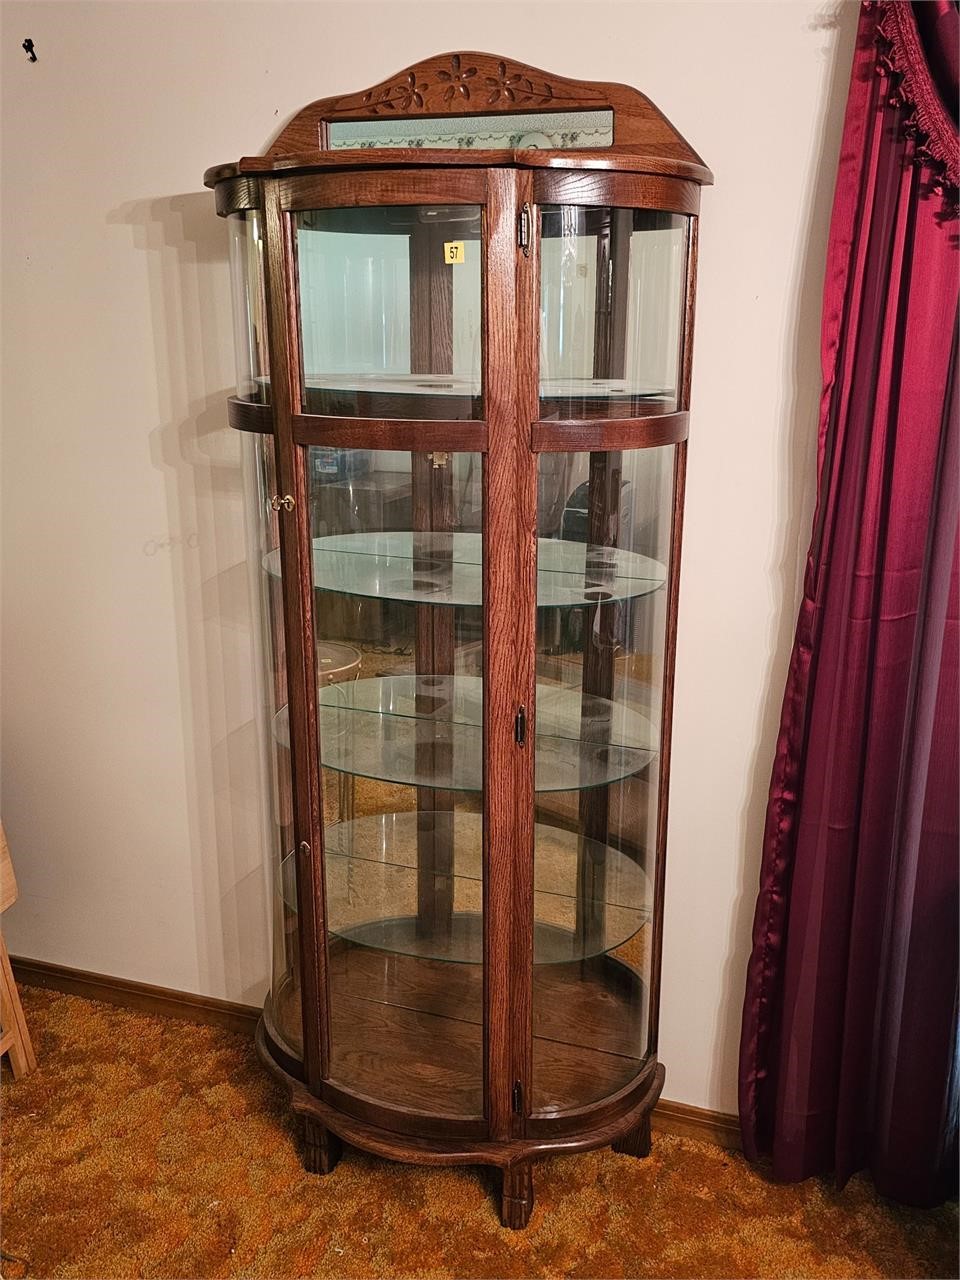 6' Curved glass pre-lit curio cabinet